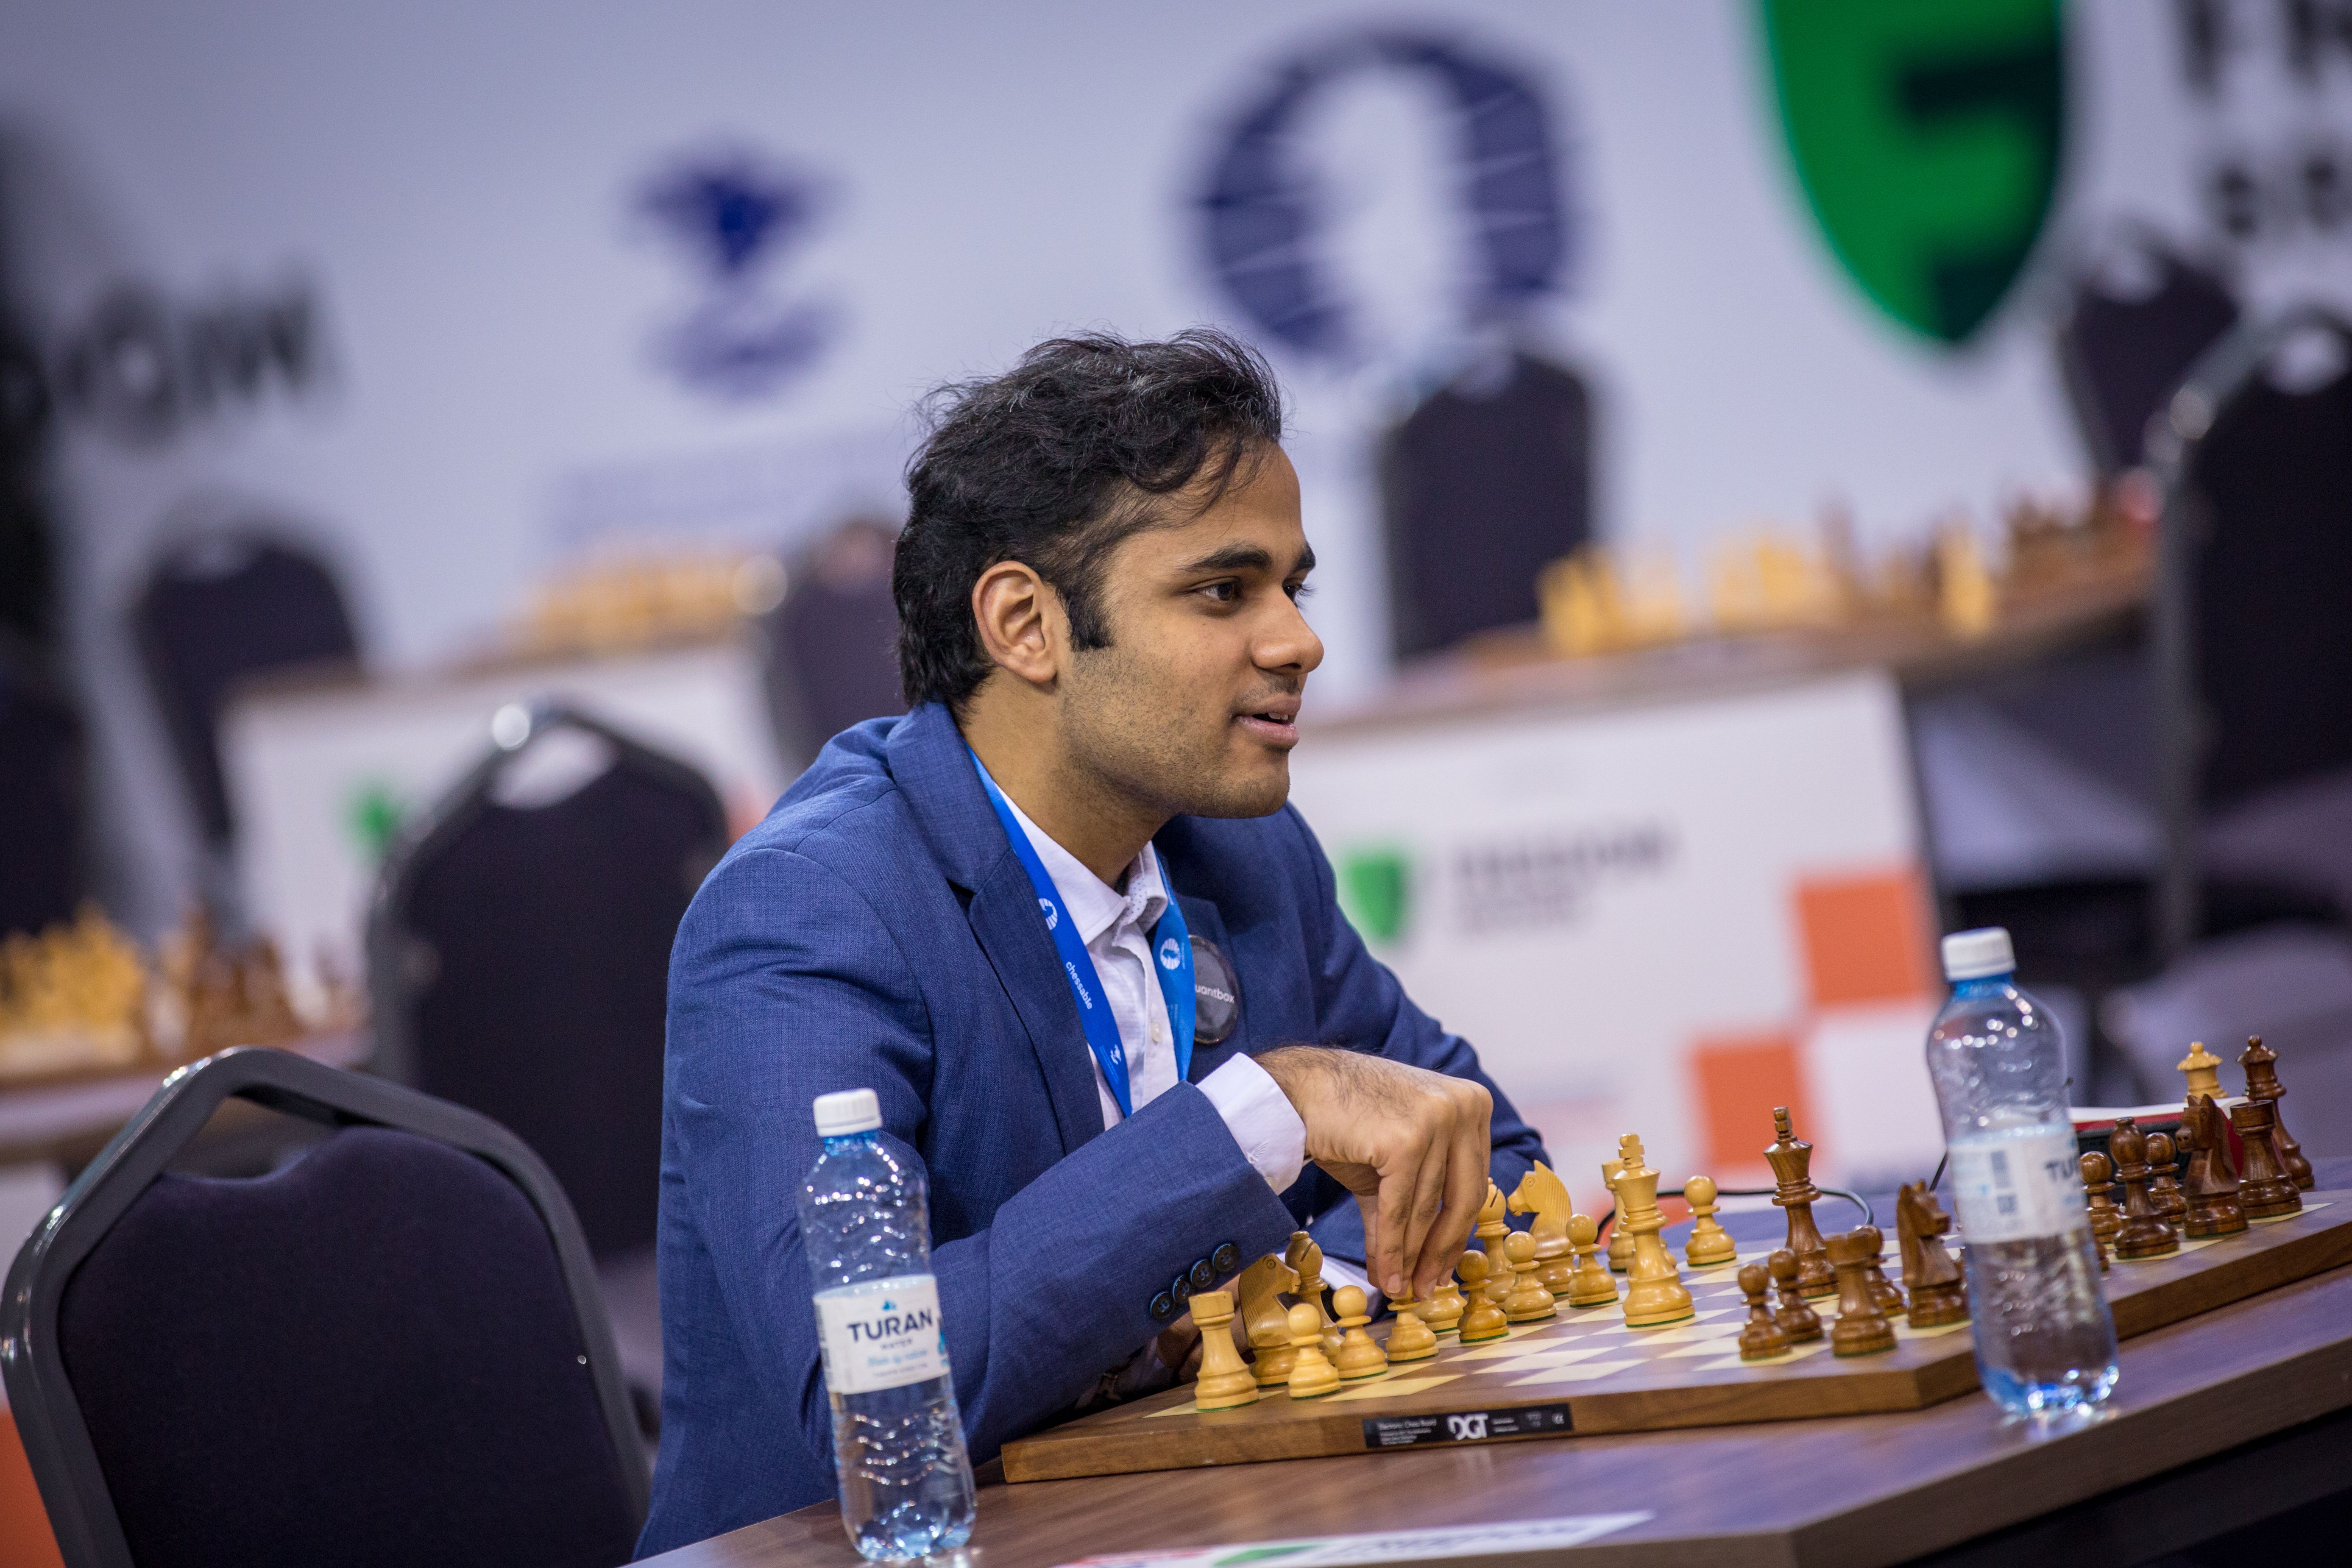 Maxime Vachier-Lagrave Vence o Campeonato Mundial de Xadrez Blitz da FIDE -  Xadrez Forte